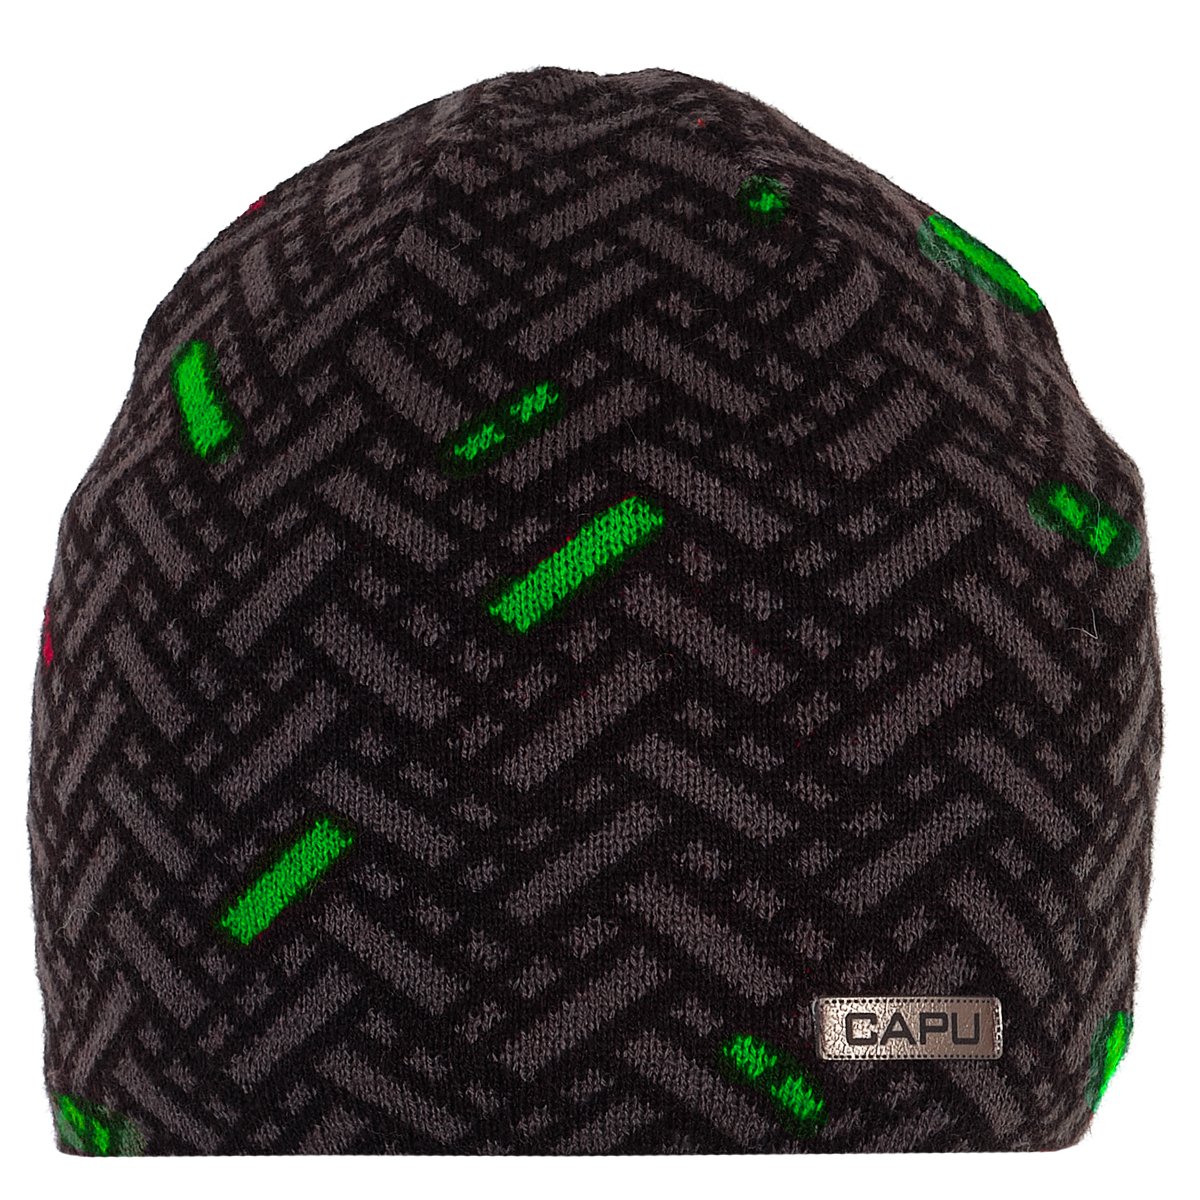 Čepice Capu 1662E M - šedá/černá/zelená